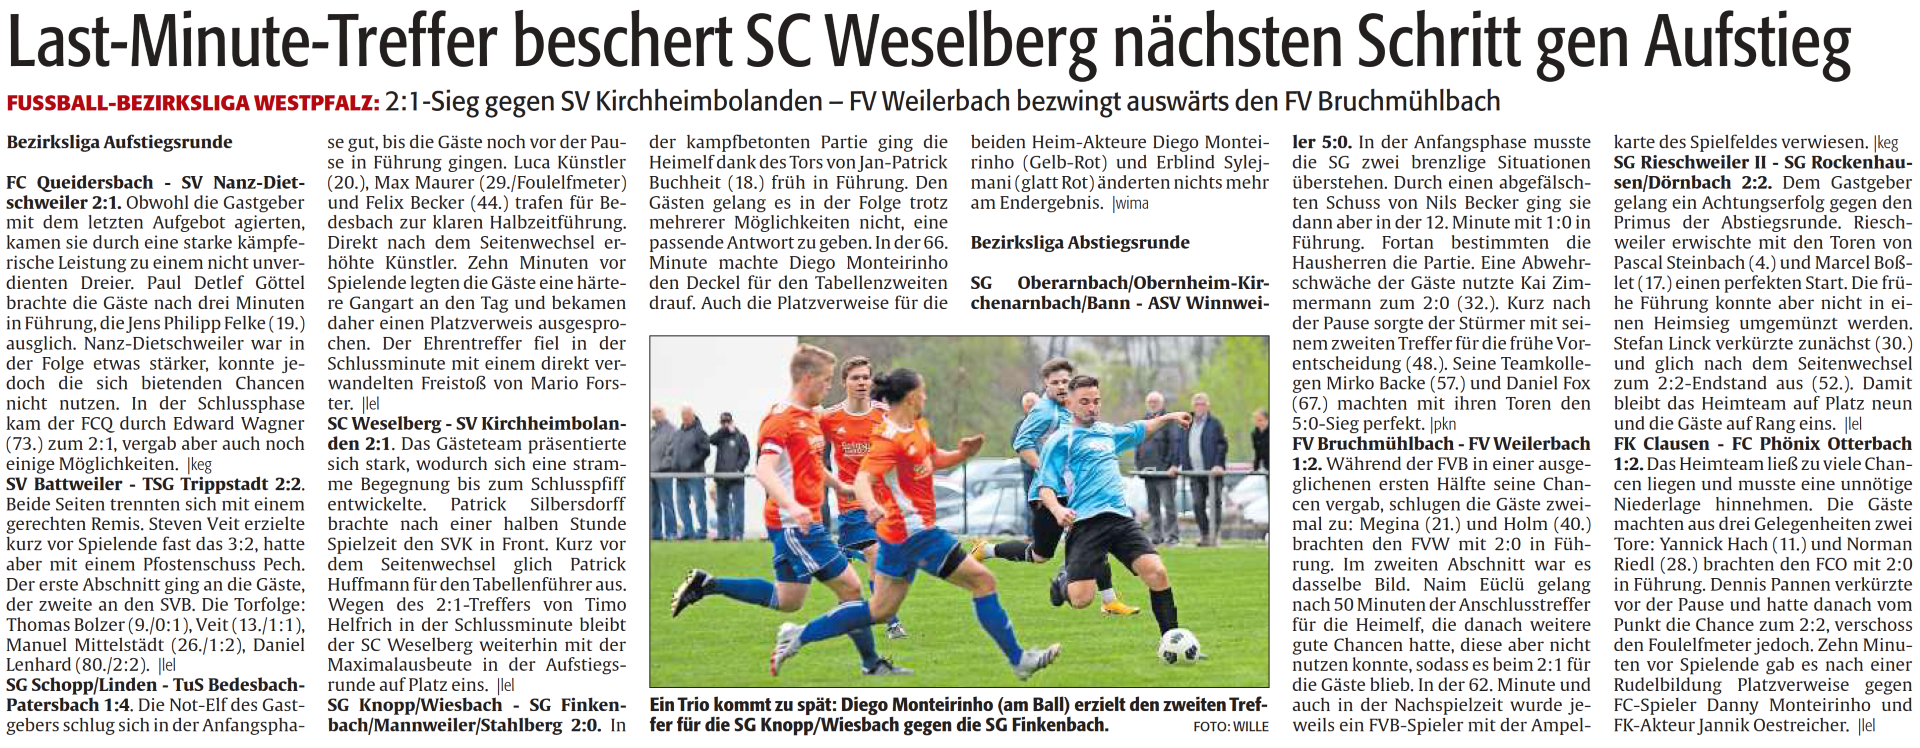 Last Minute Treffer beschert SC Weselberg nächsten Schritt gen Aufstieg